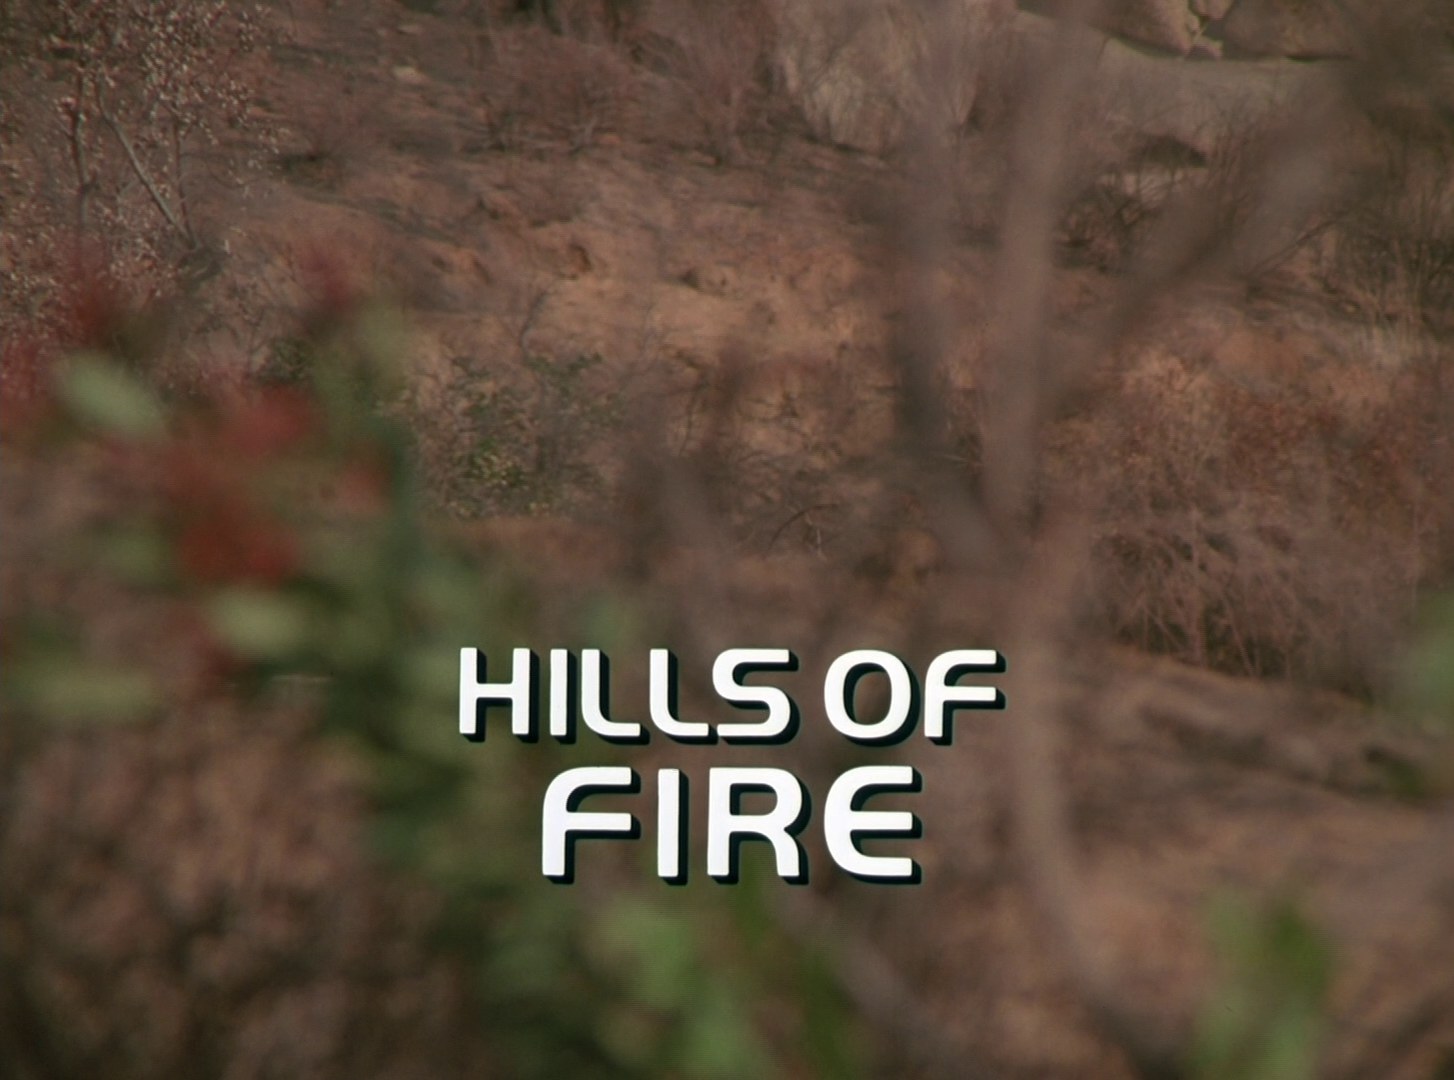 Knight Rider Season 4 - Episode 80 - Hills Of Fire - Photo 1